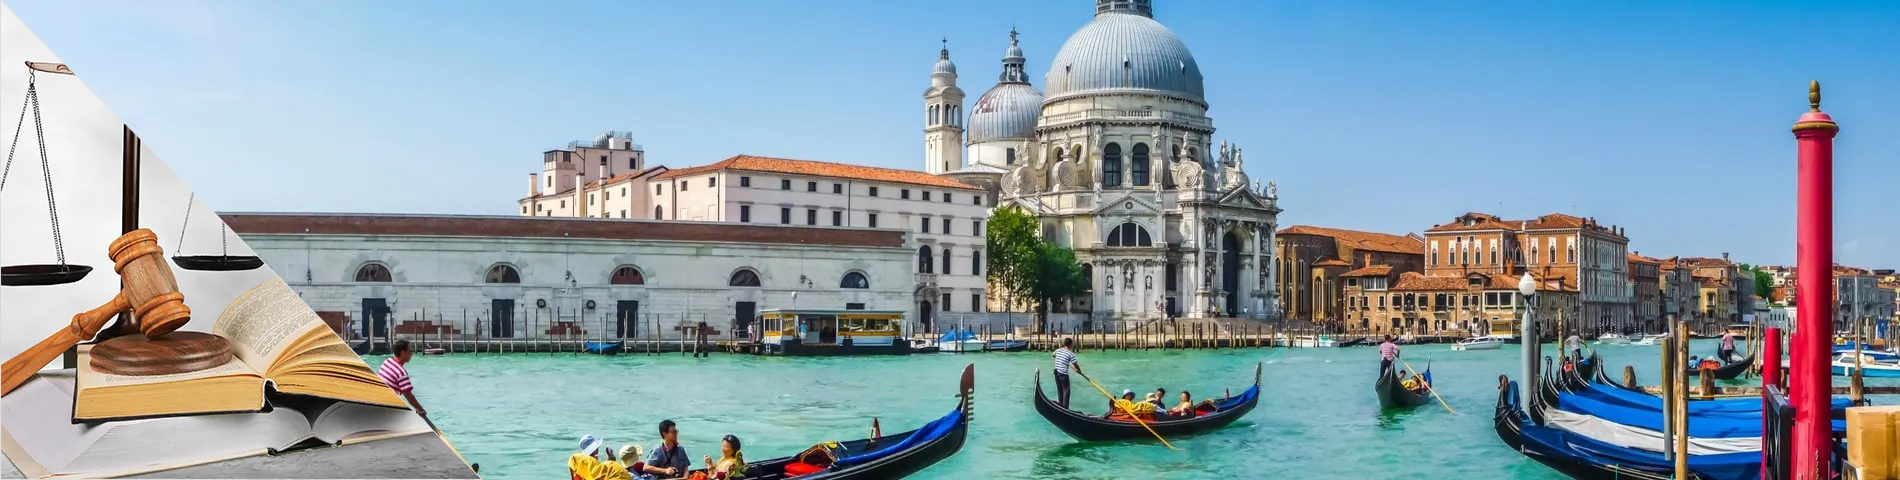 Veneza - Italiano para Advogados